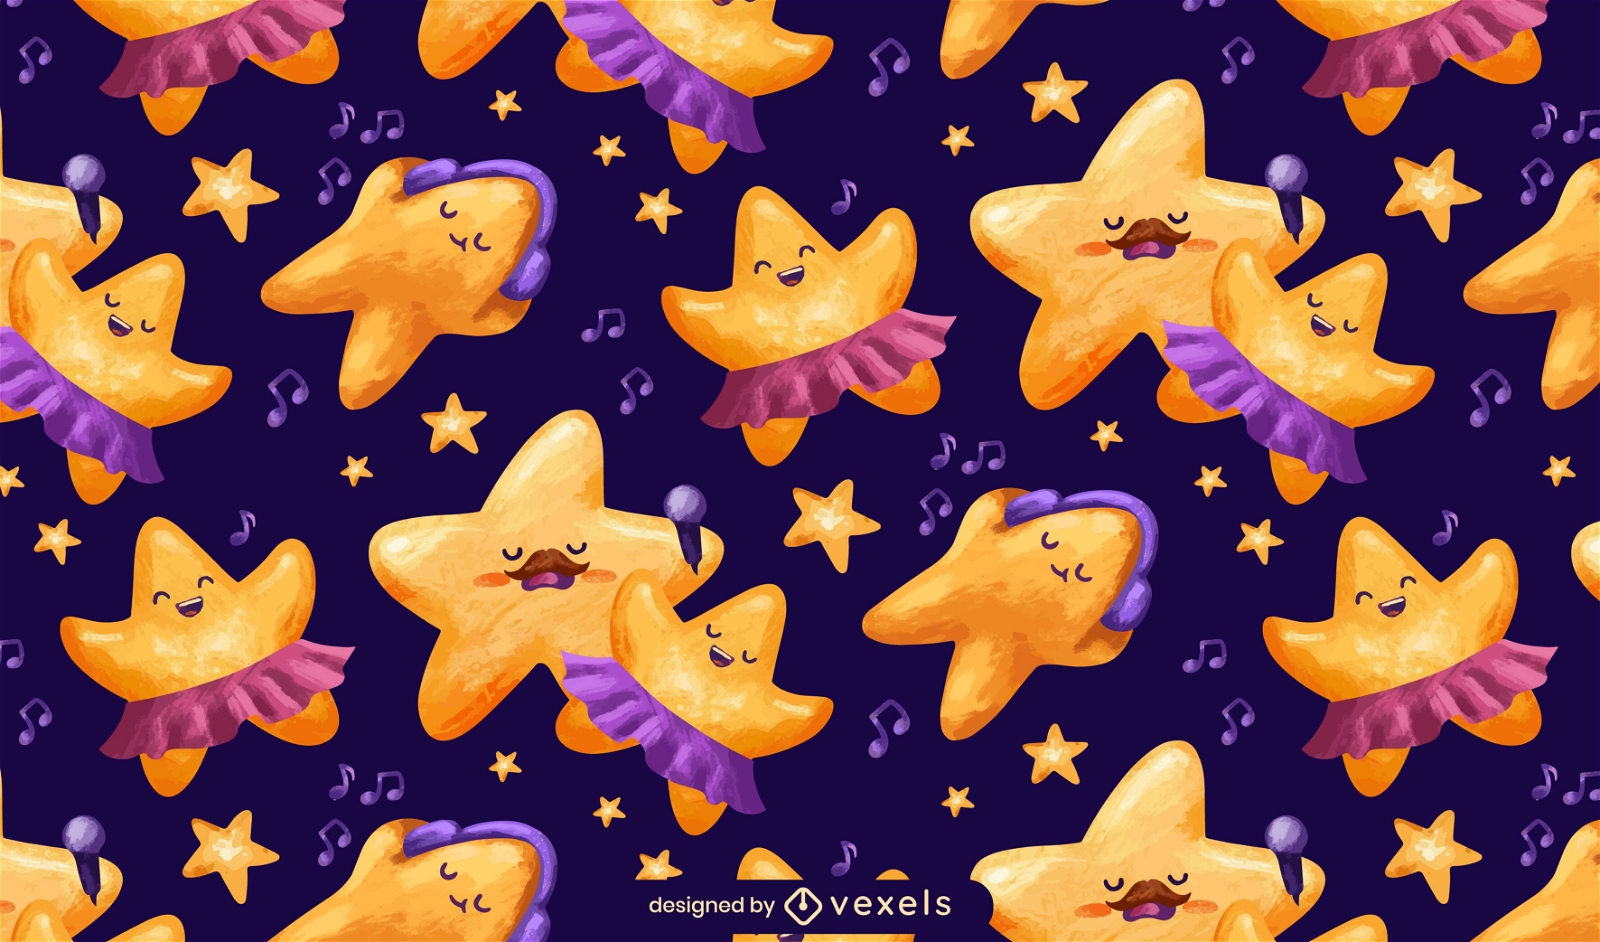 Watercolor stars pattern design